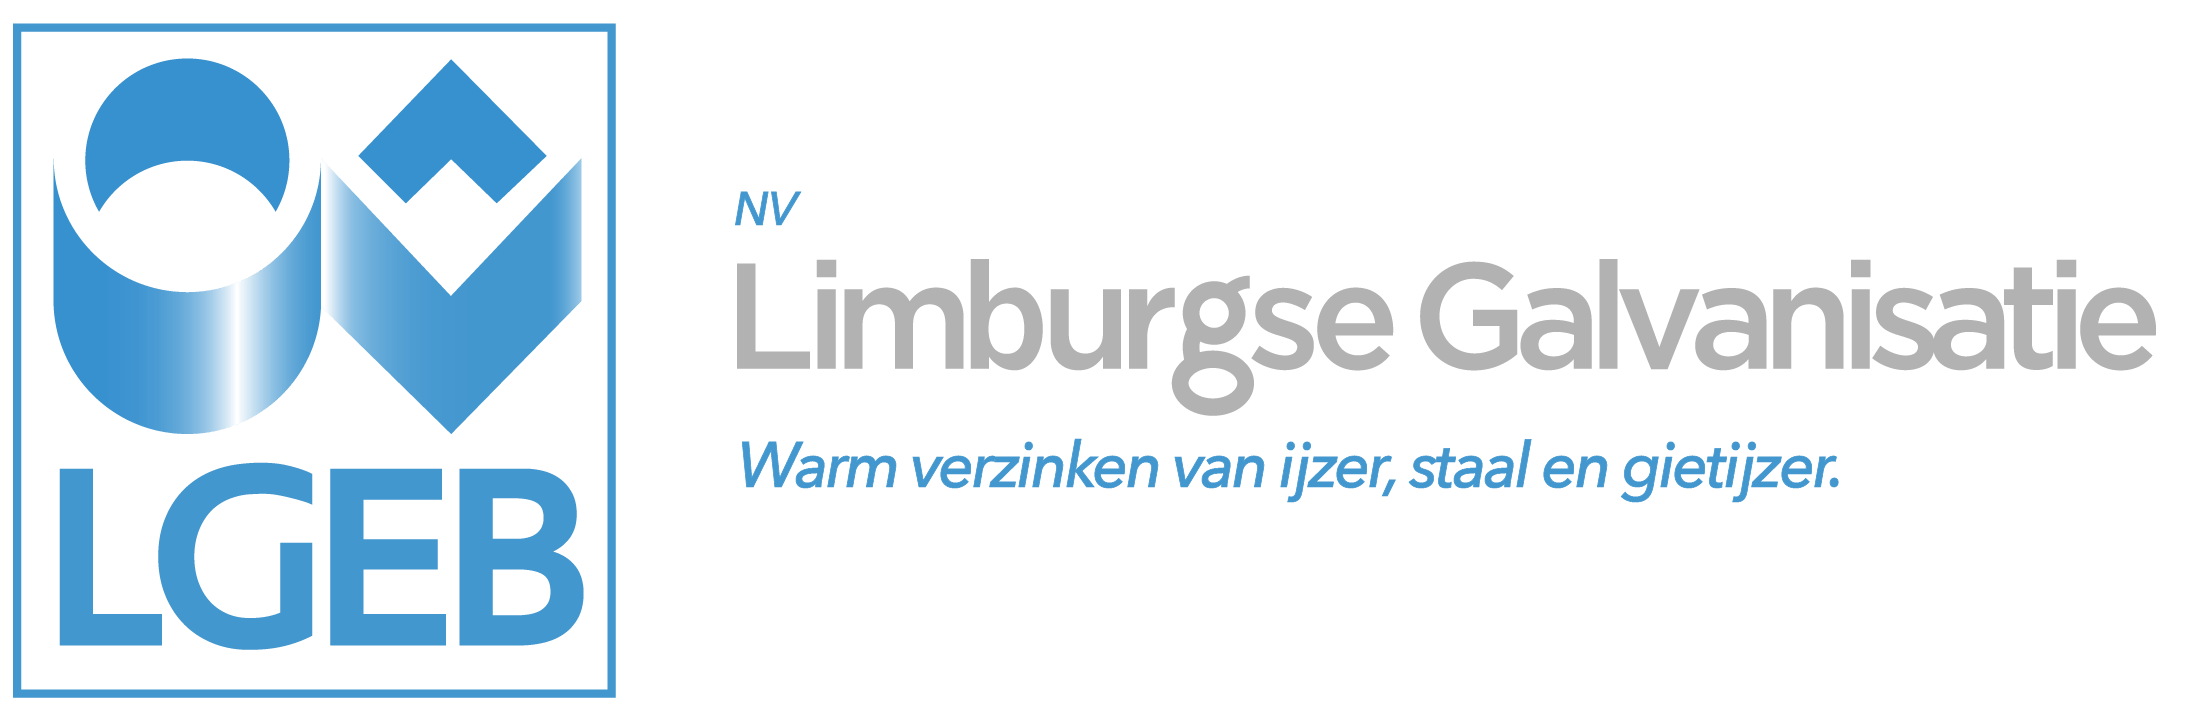 Logo Limburgse galvanisatie